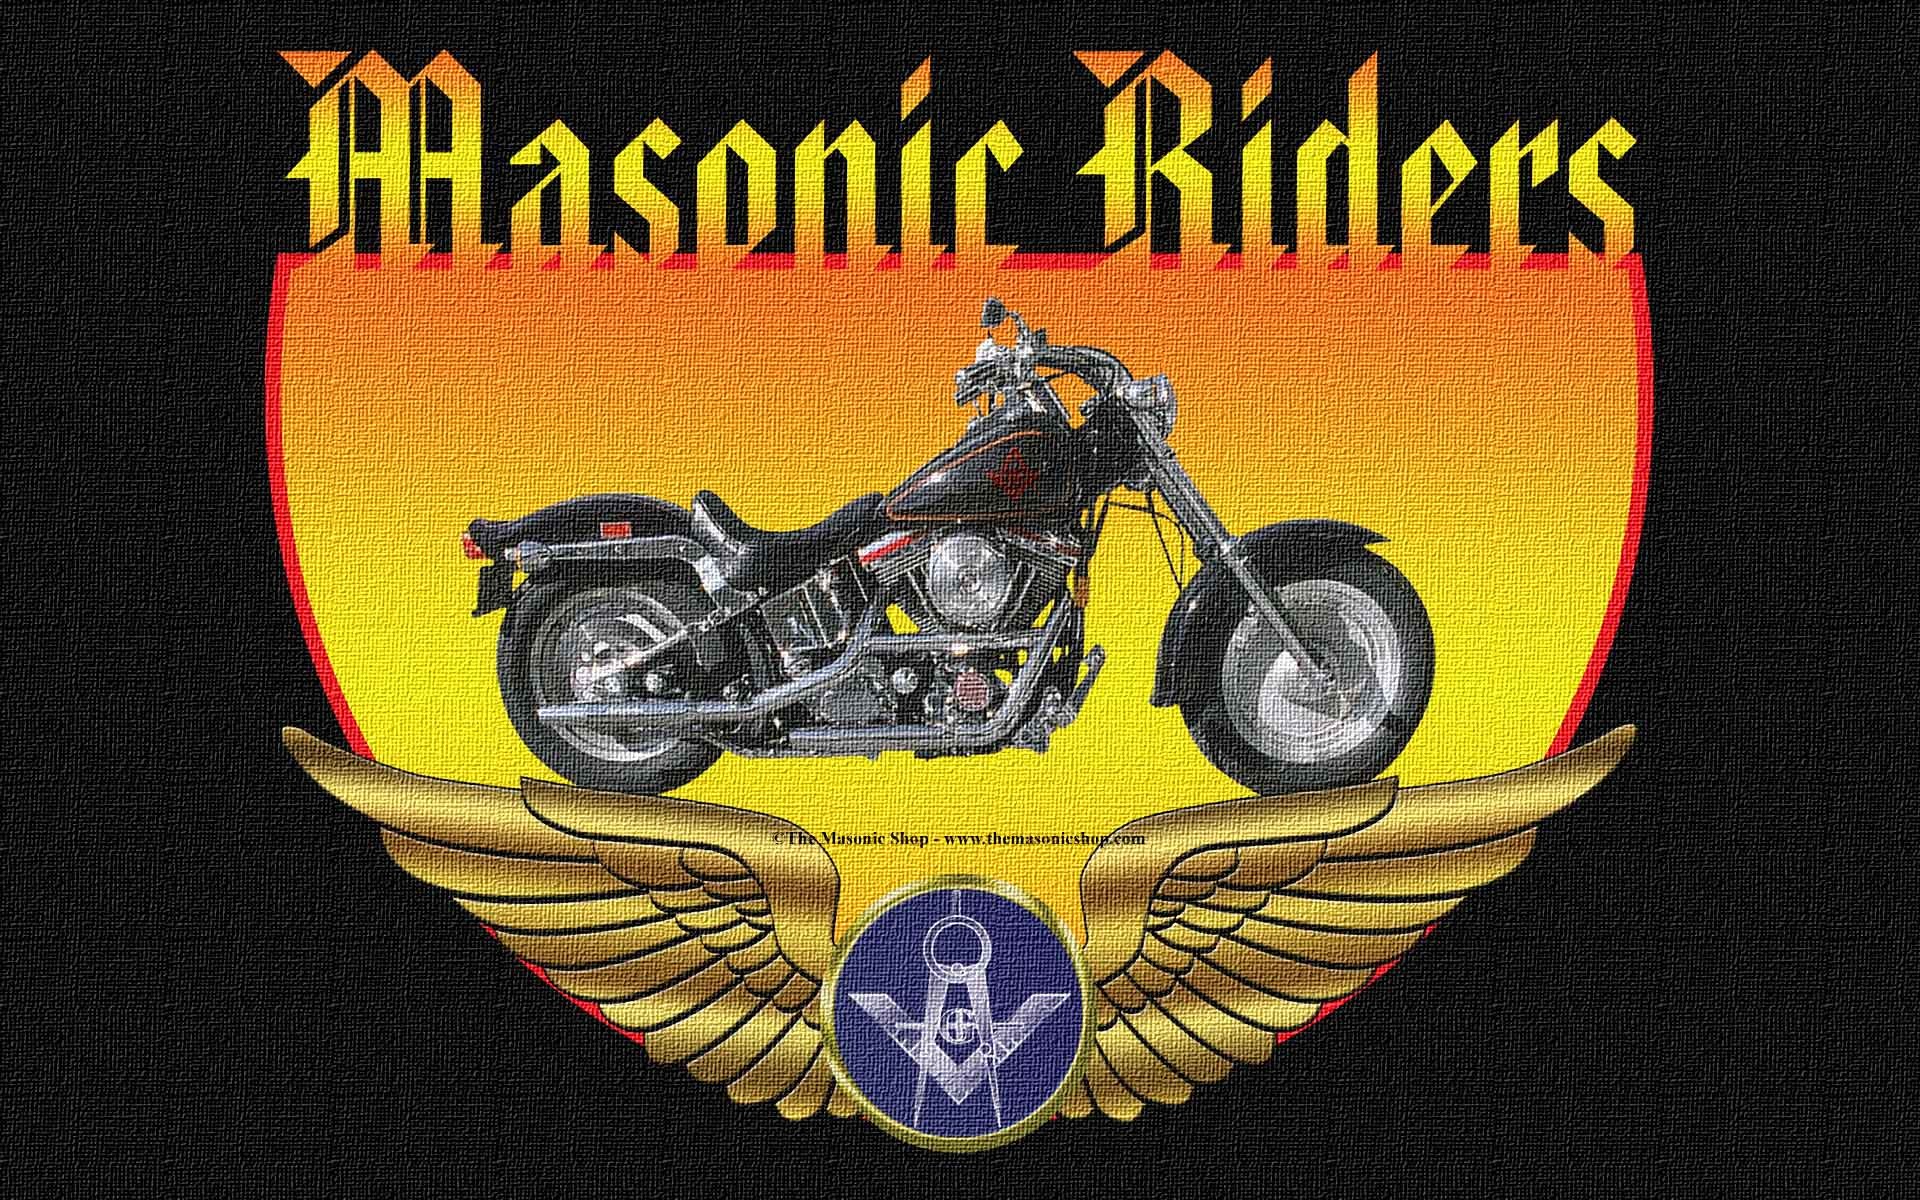 Masonic Motorcycle Riders